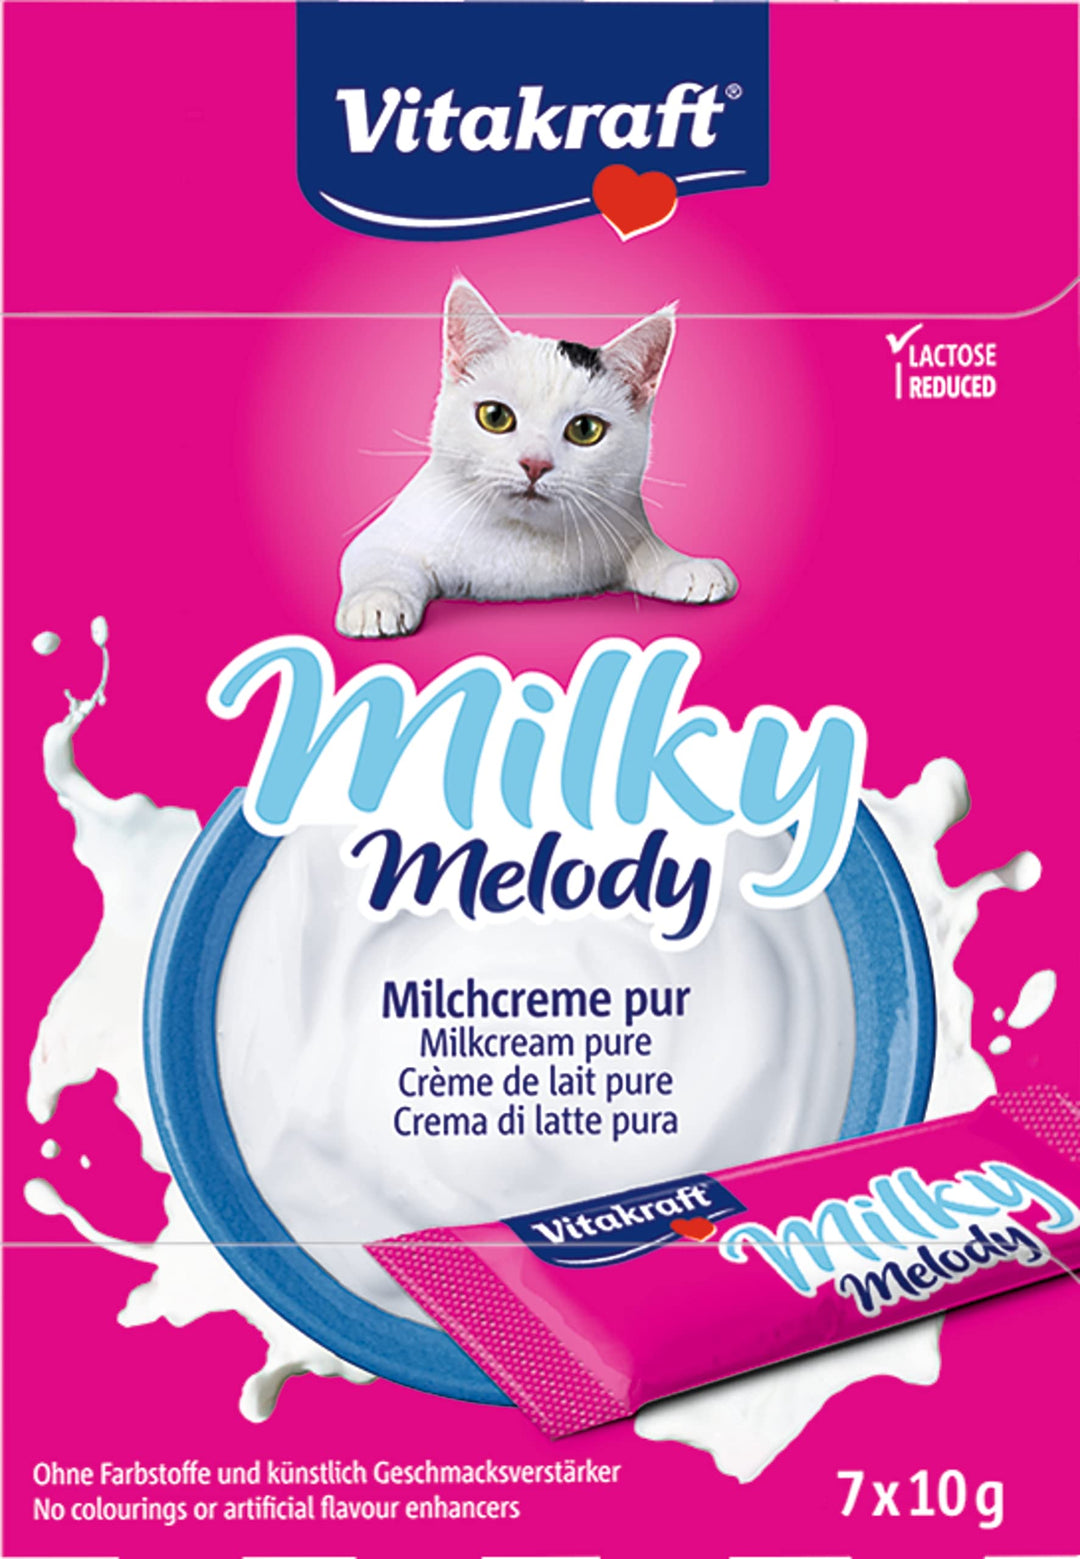 Vitakraft Milky melody, Pure milkcream